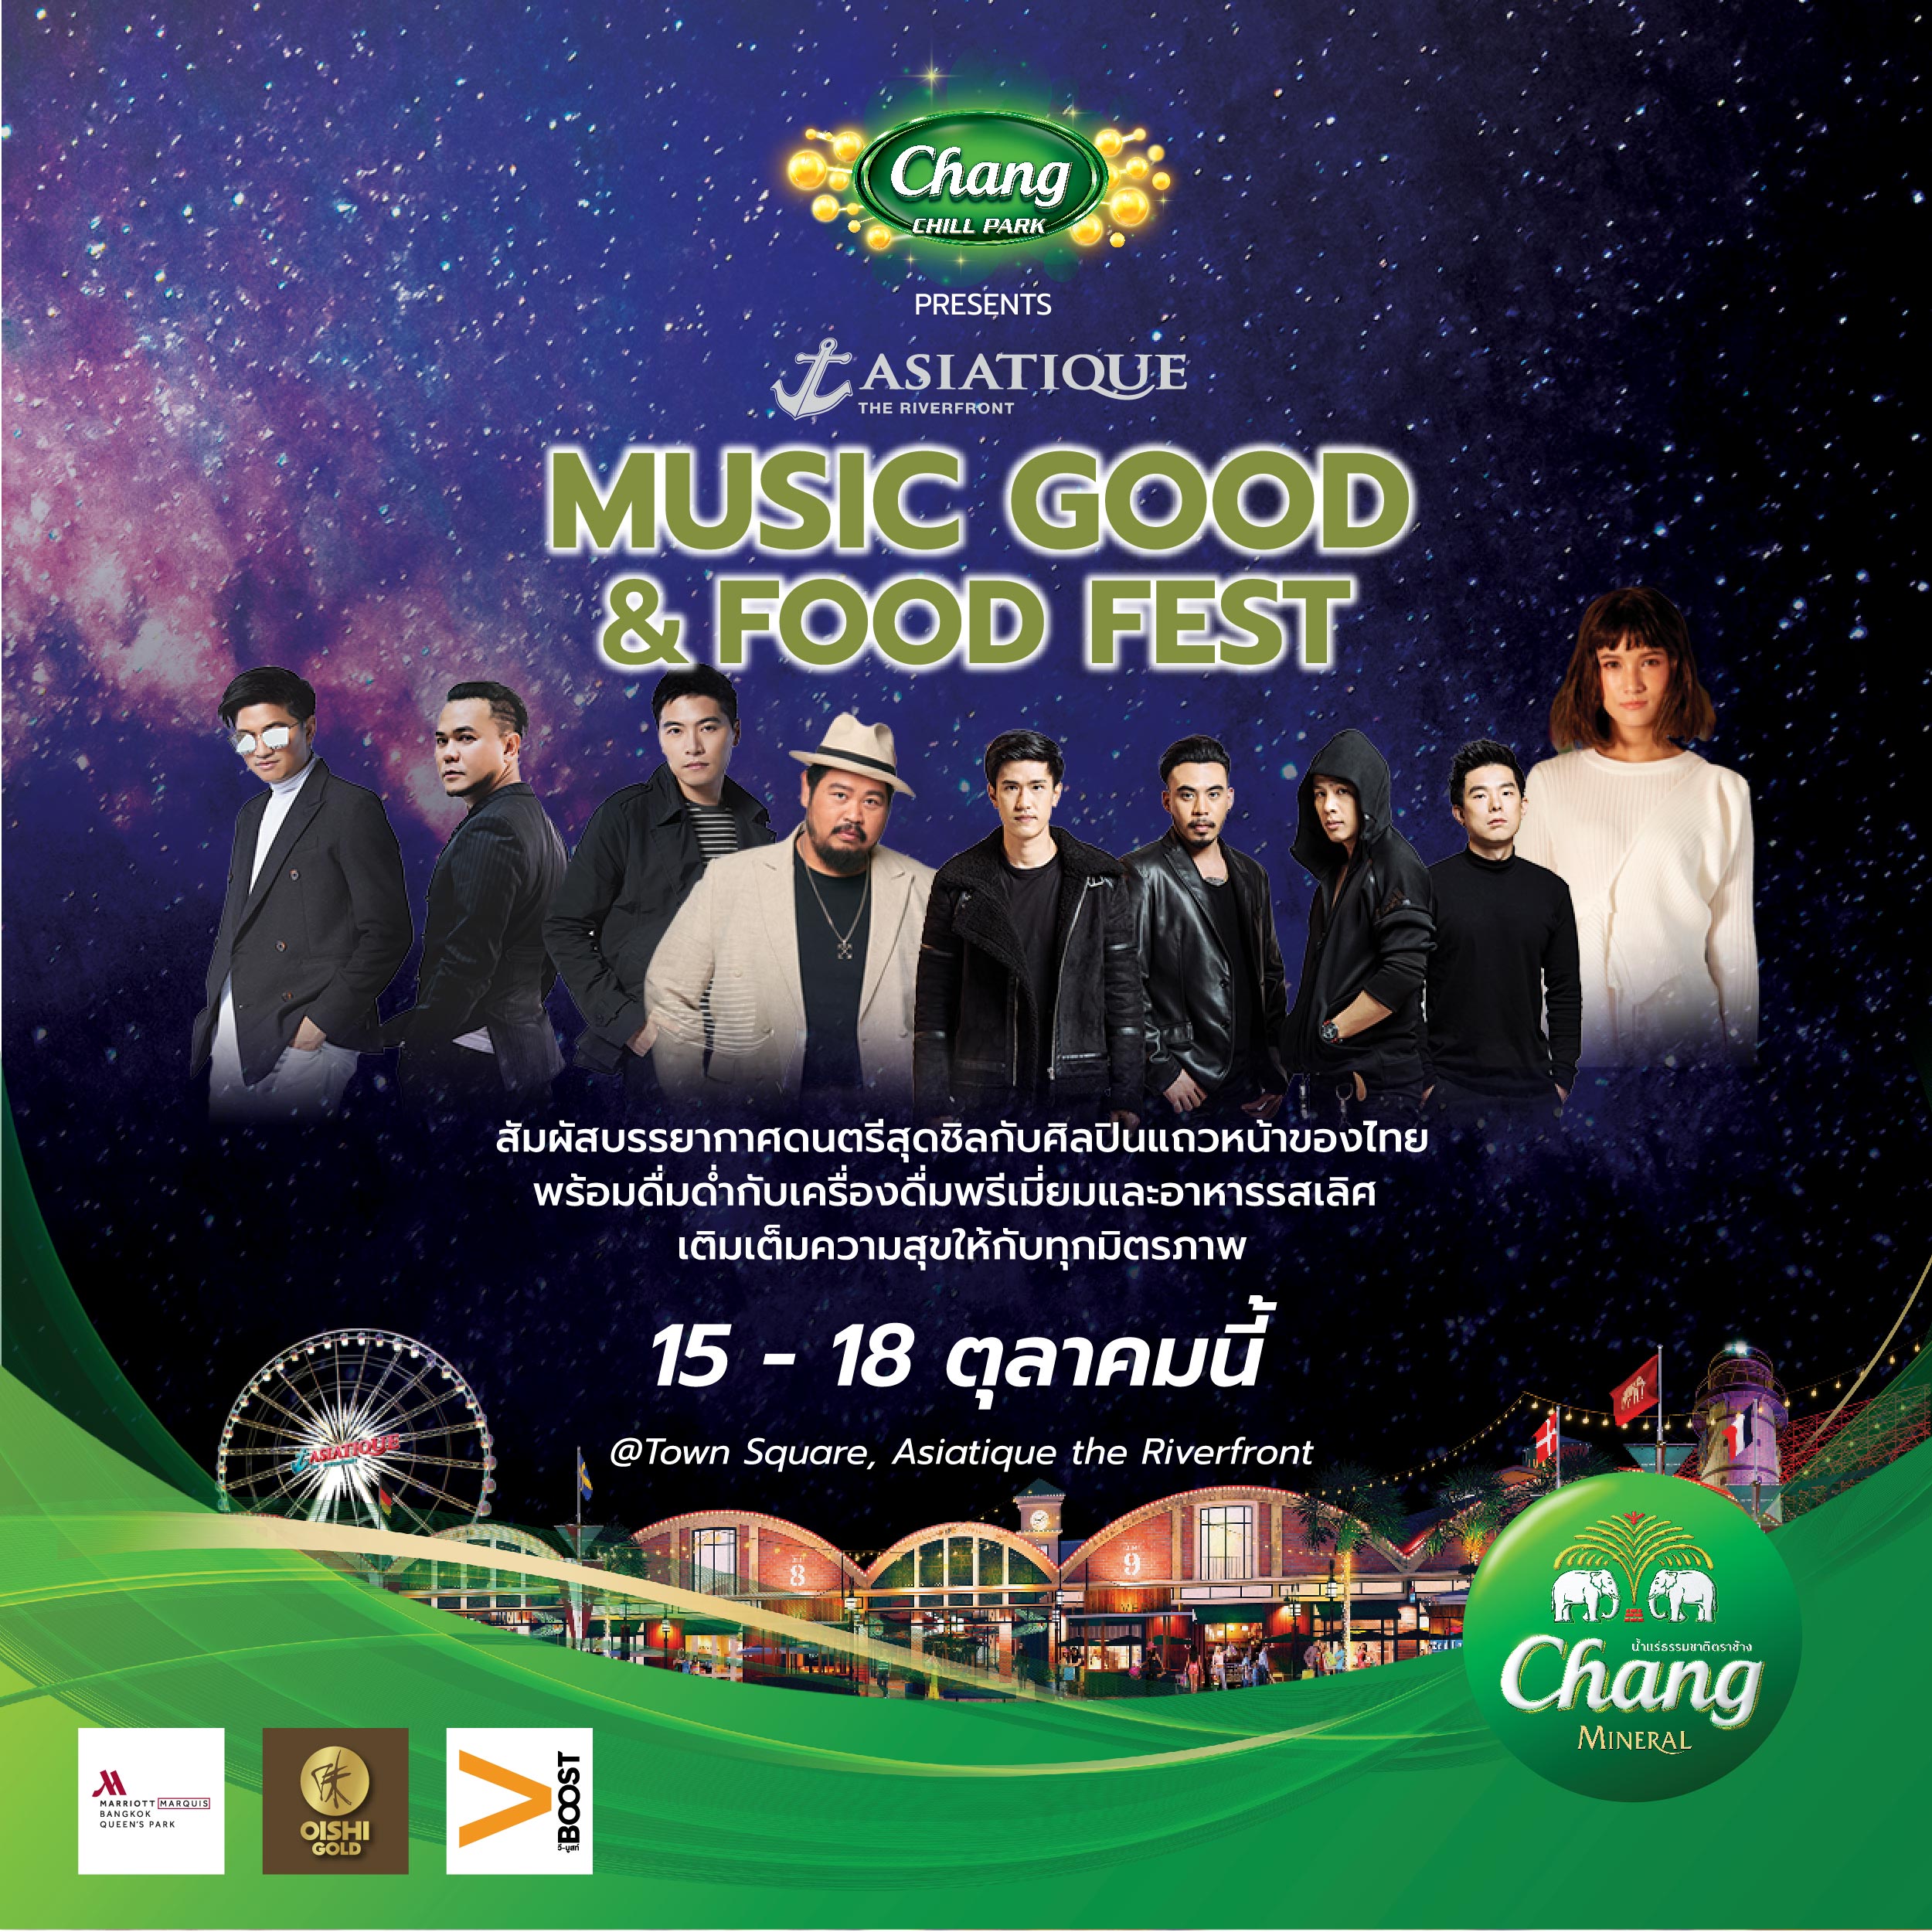 Chang Chill Park presents ASIATIQUE Music Good Food Fest 15-18 ต.ค. นี้ ฟรี! คอนเสิร์ตสุดชิล 4 วัน 4 ศิลปิน